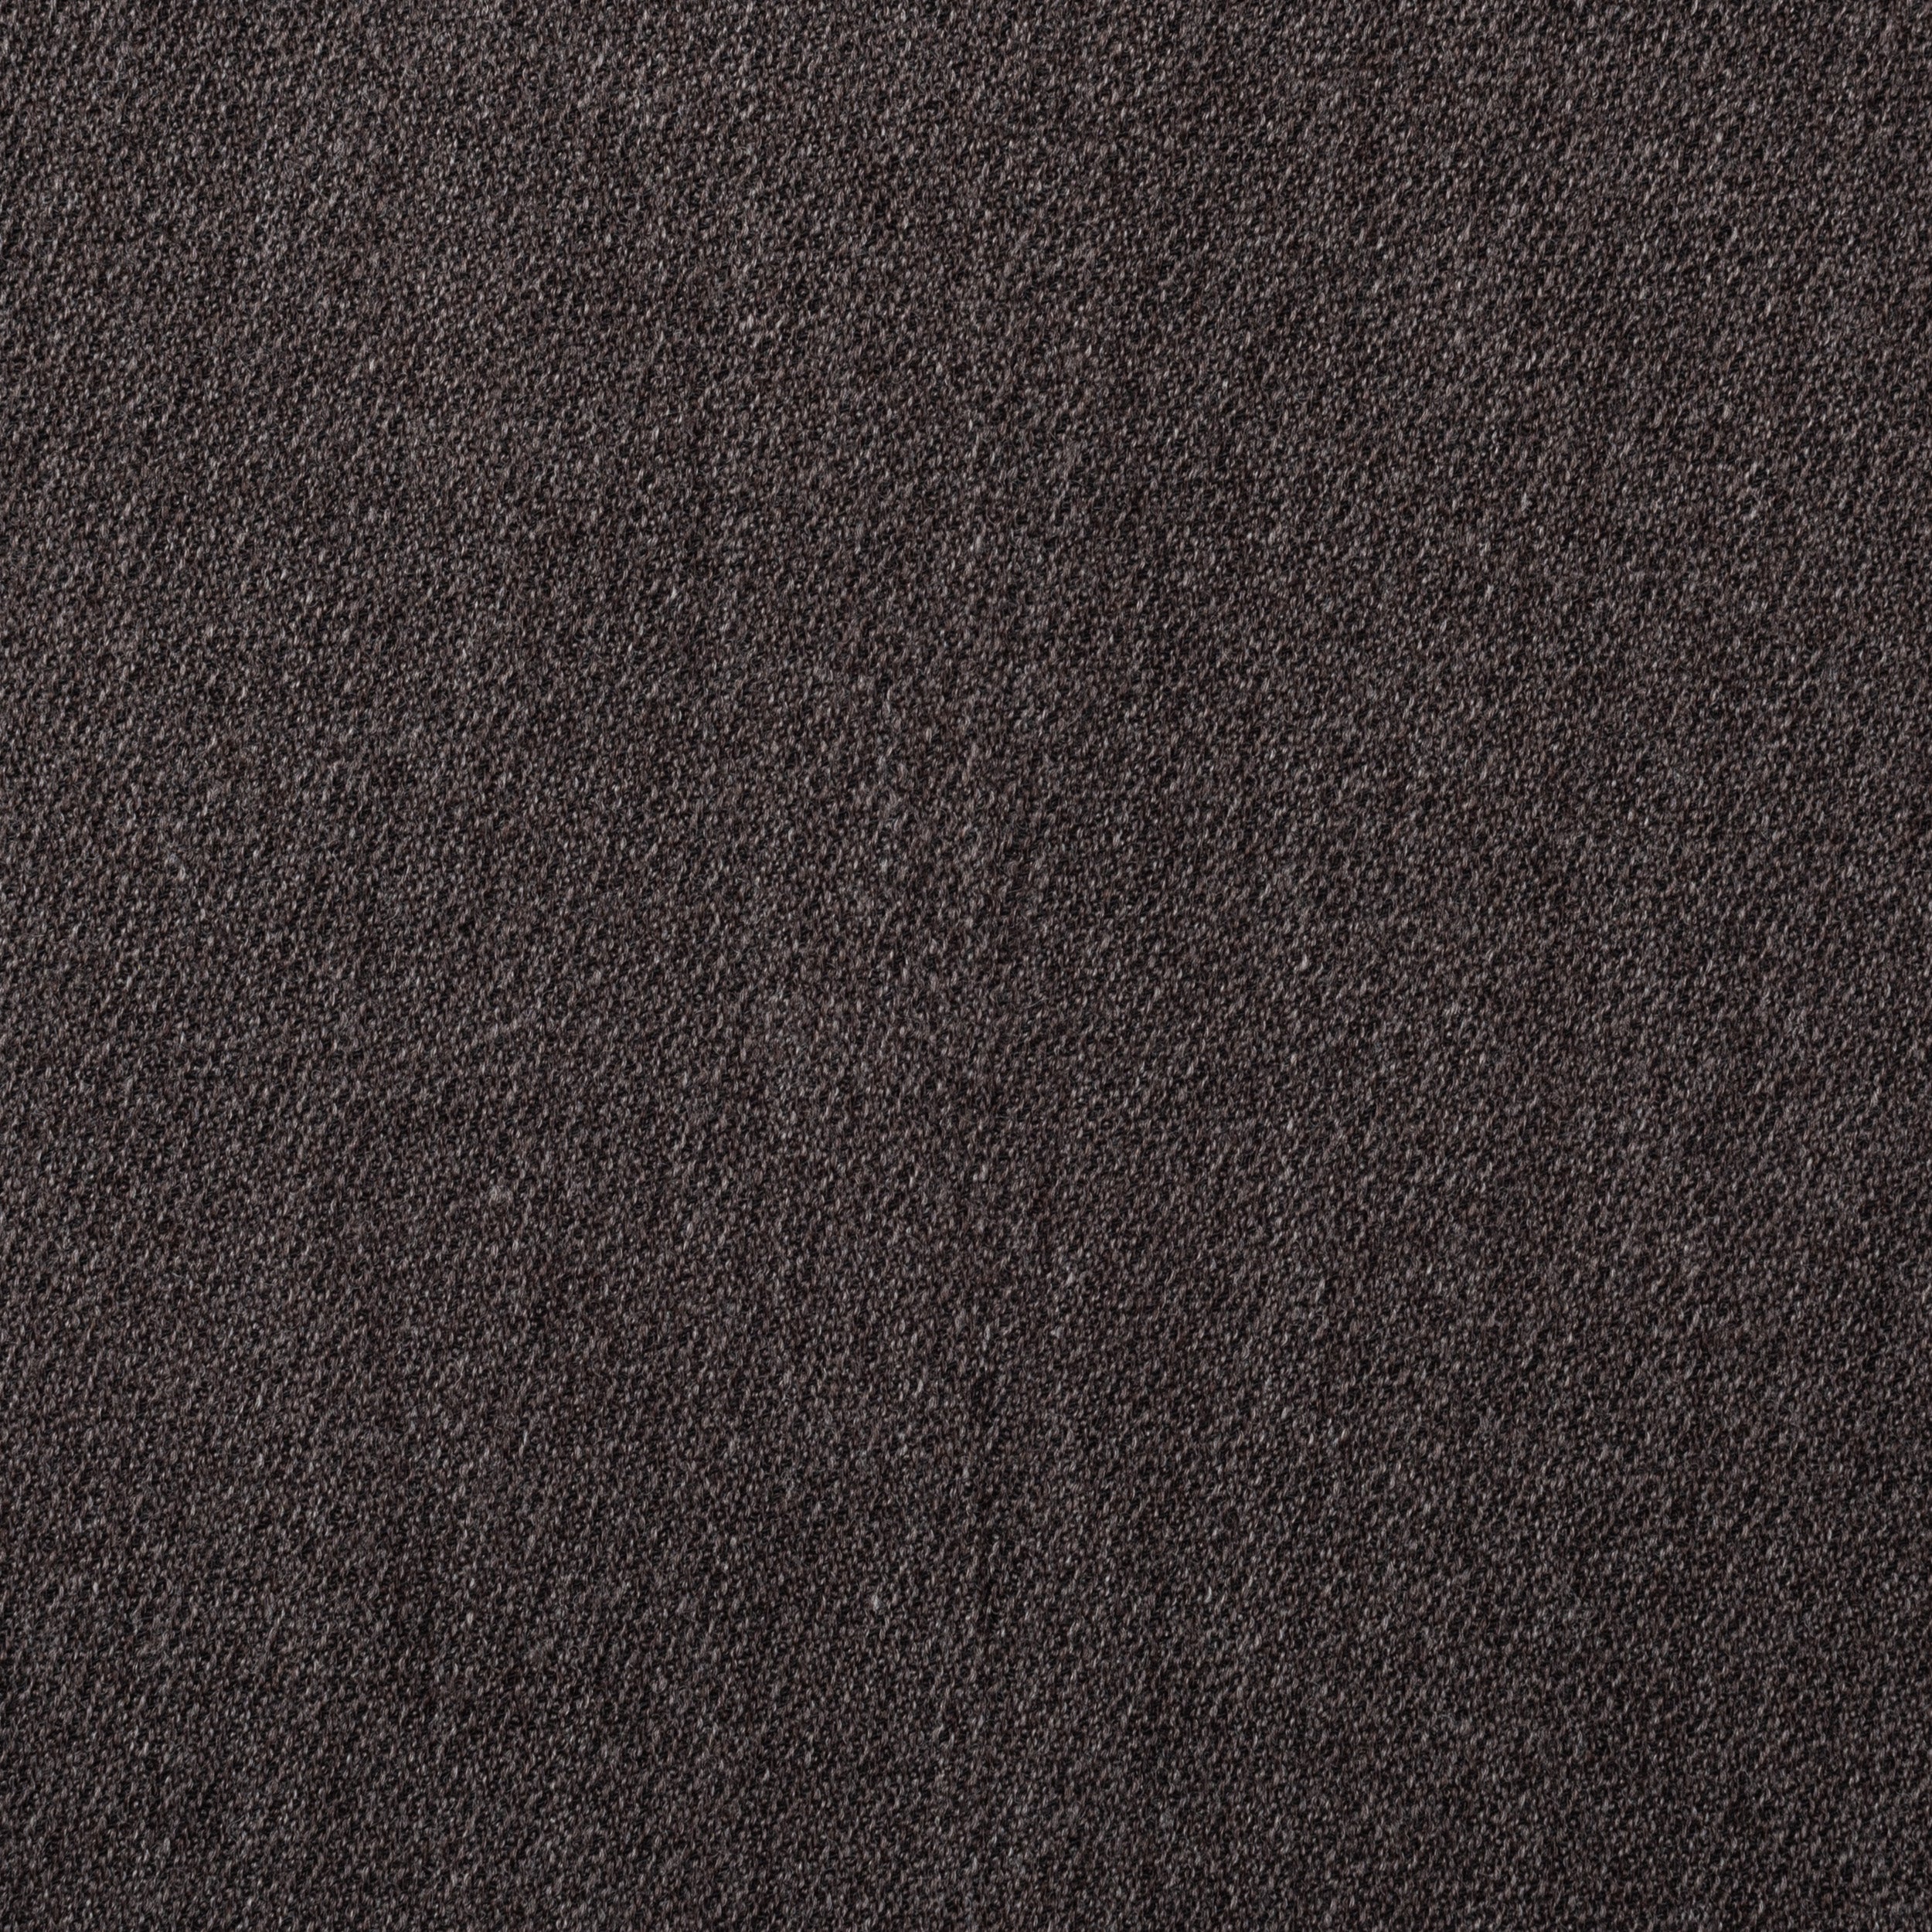 CORSOCHIARO by CASTANGIA Dark Brown Wool Suit EU 50 NEW US 40 CASTANGIA